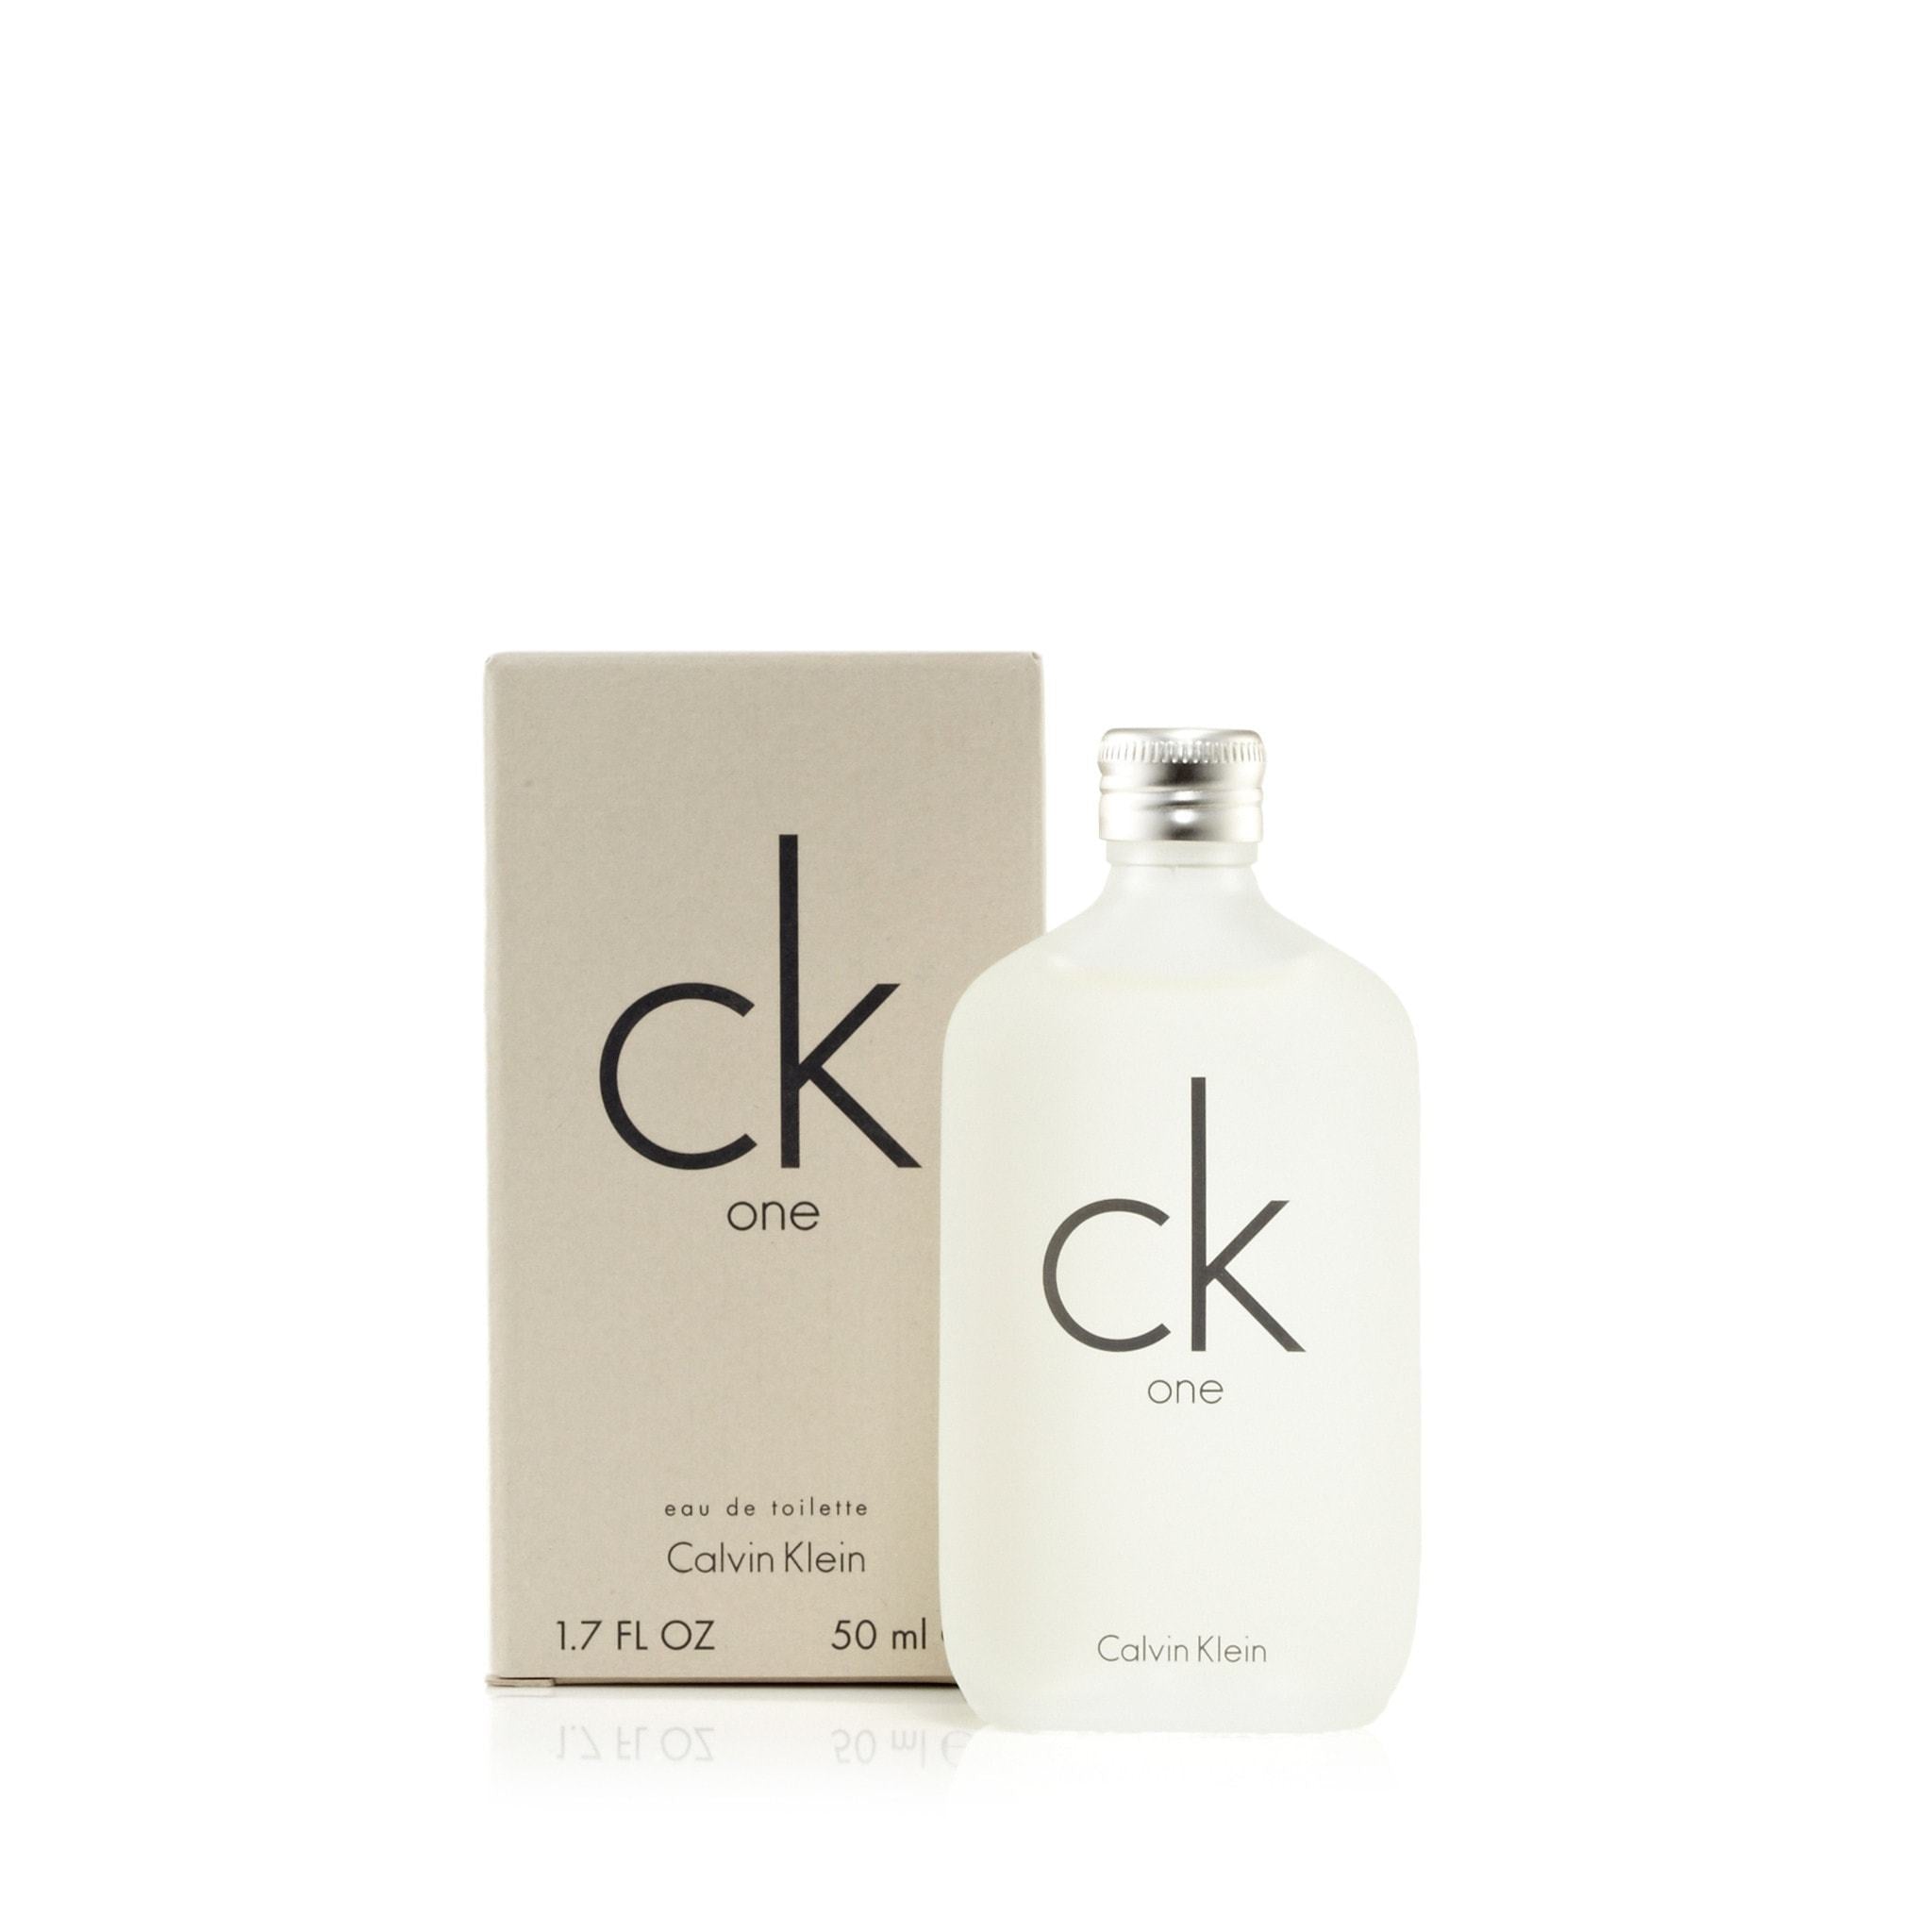 Calvin Klein Ck One Eau de Toilette Perfume, Unisex, 6.7 Oz